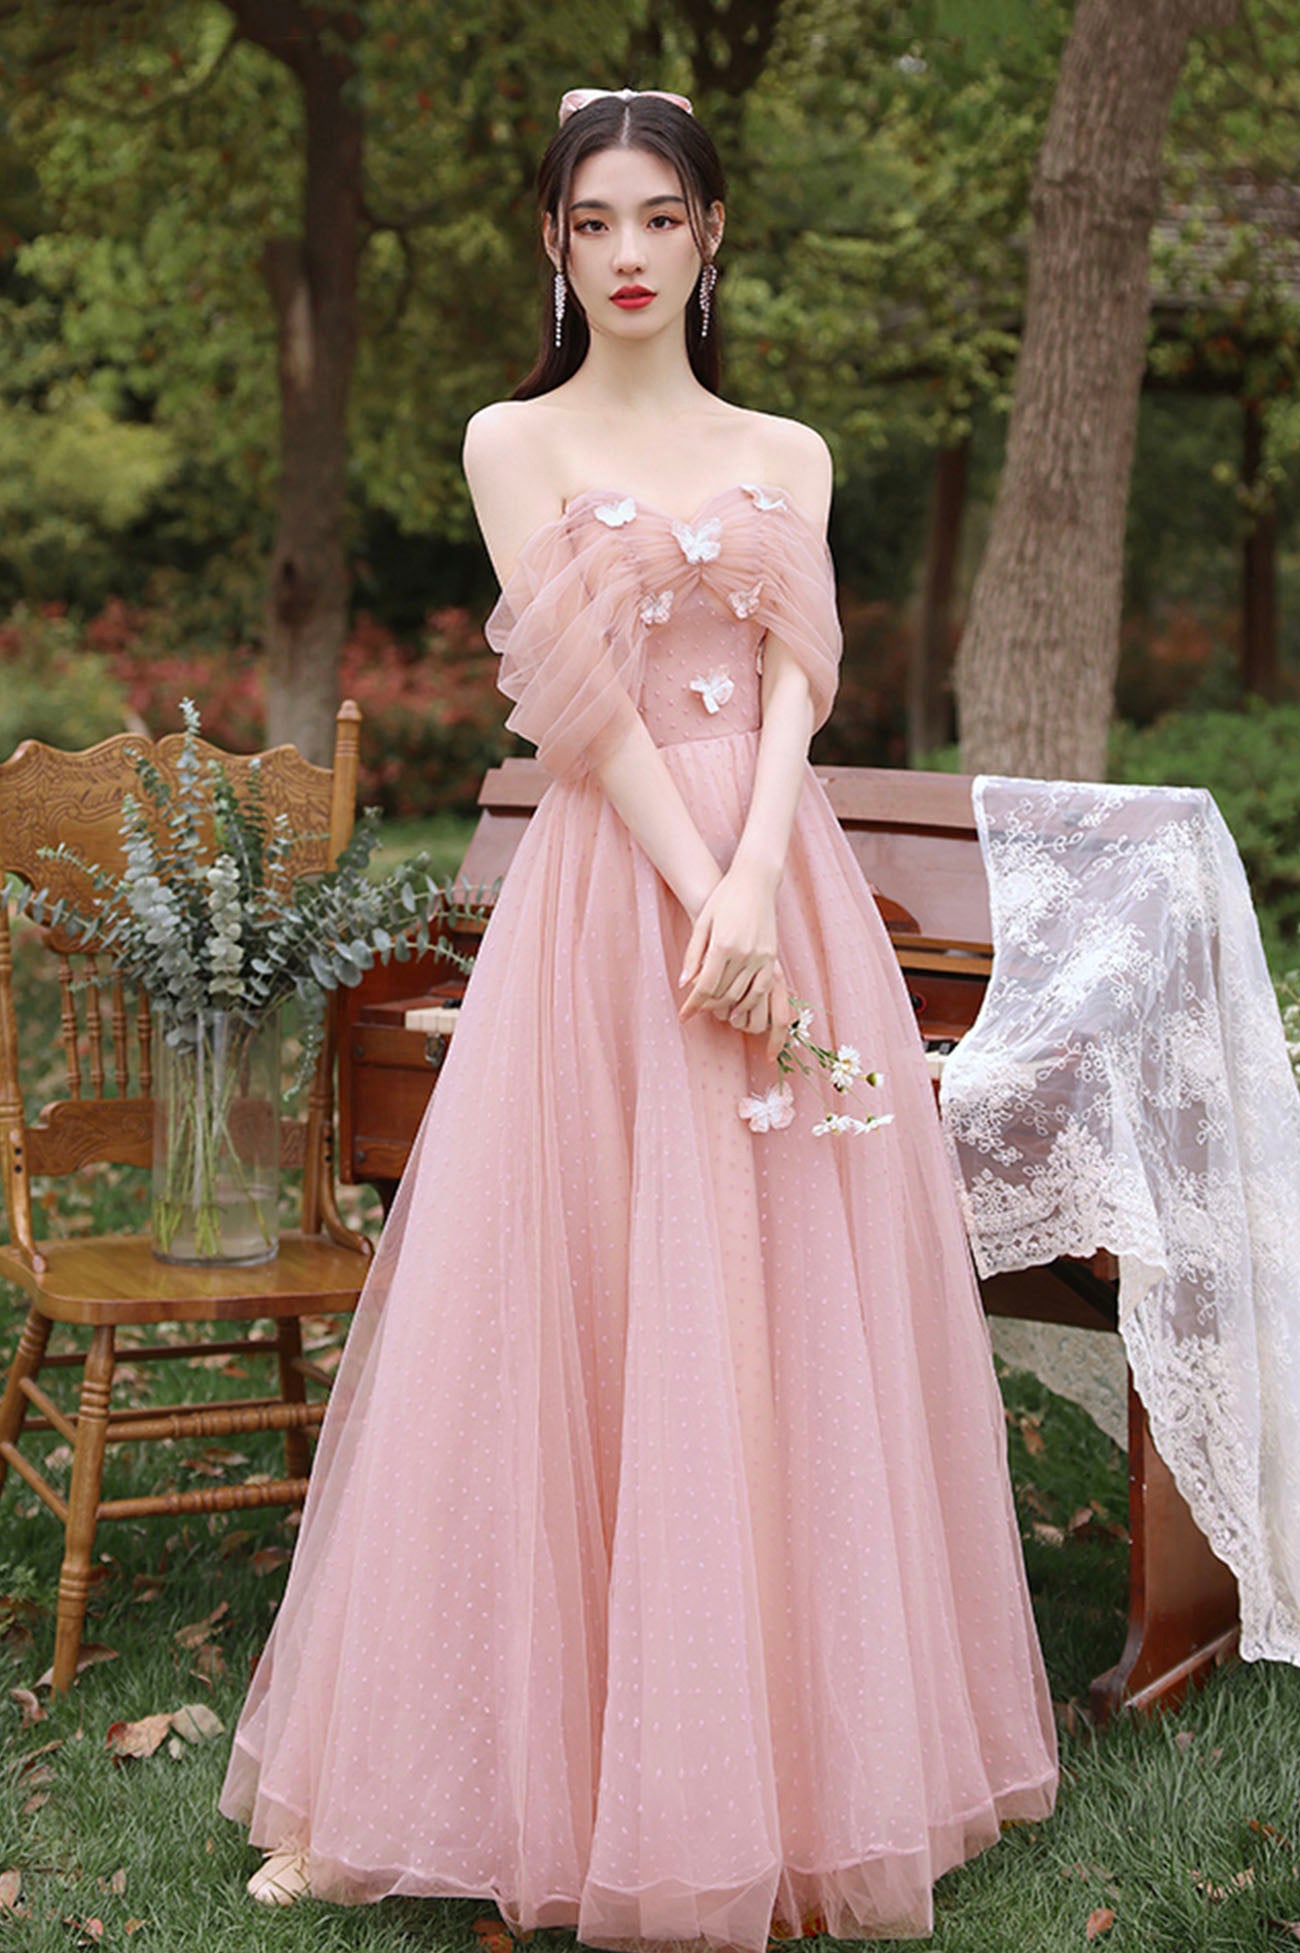 cute pink dress